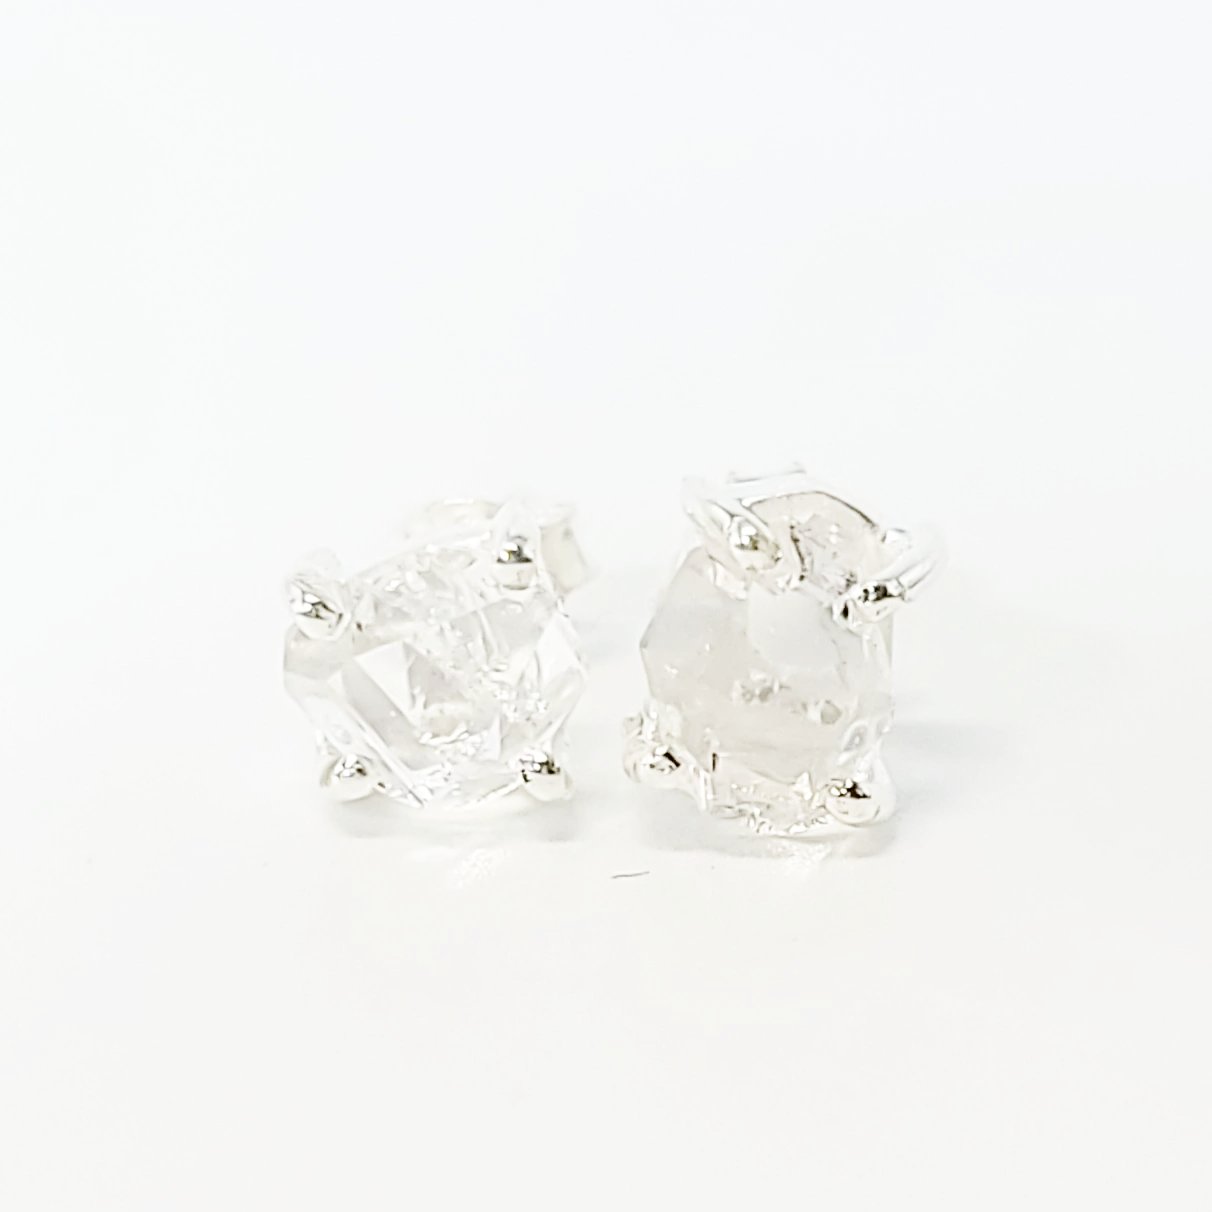 Herkimer Diamonds Earrings Sterling Silver Stud